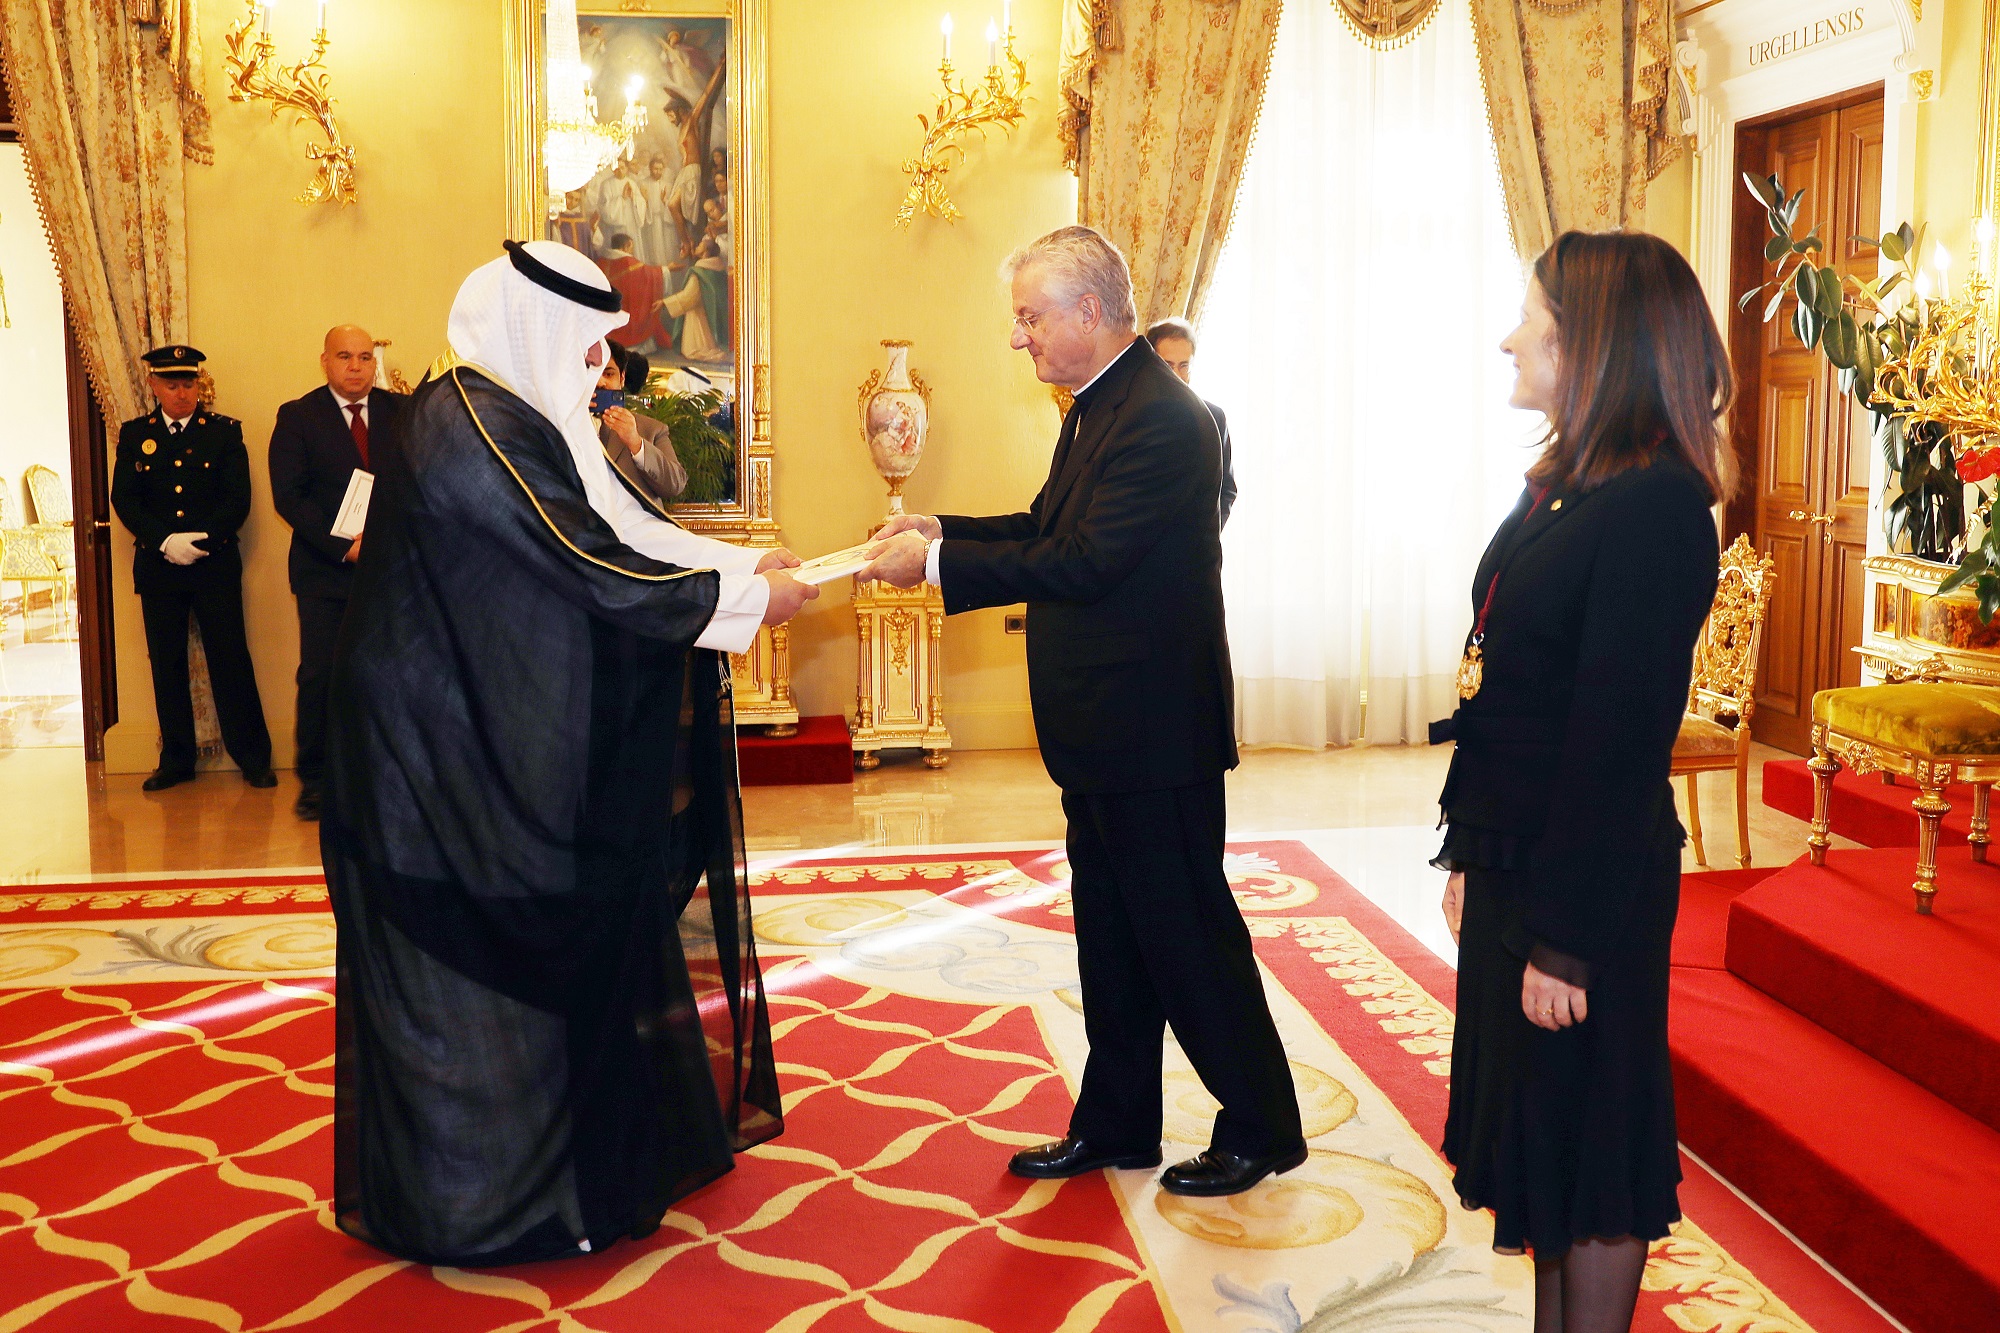 Kuwait's Ambassador to Spain Khalifa Al-Kharafi presents his credentials to Co-Prince of Andorra Bishop Joan Enric Vives i Sicilia as a non-resident envoy